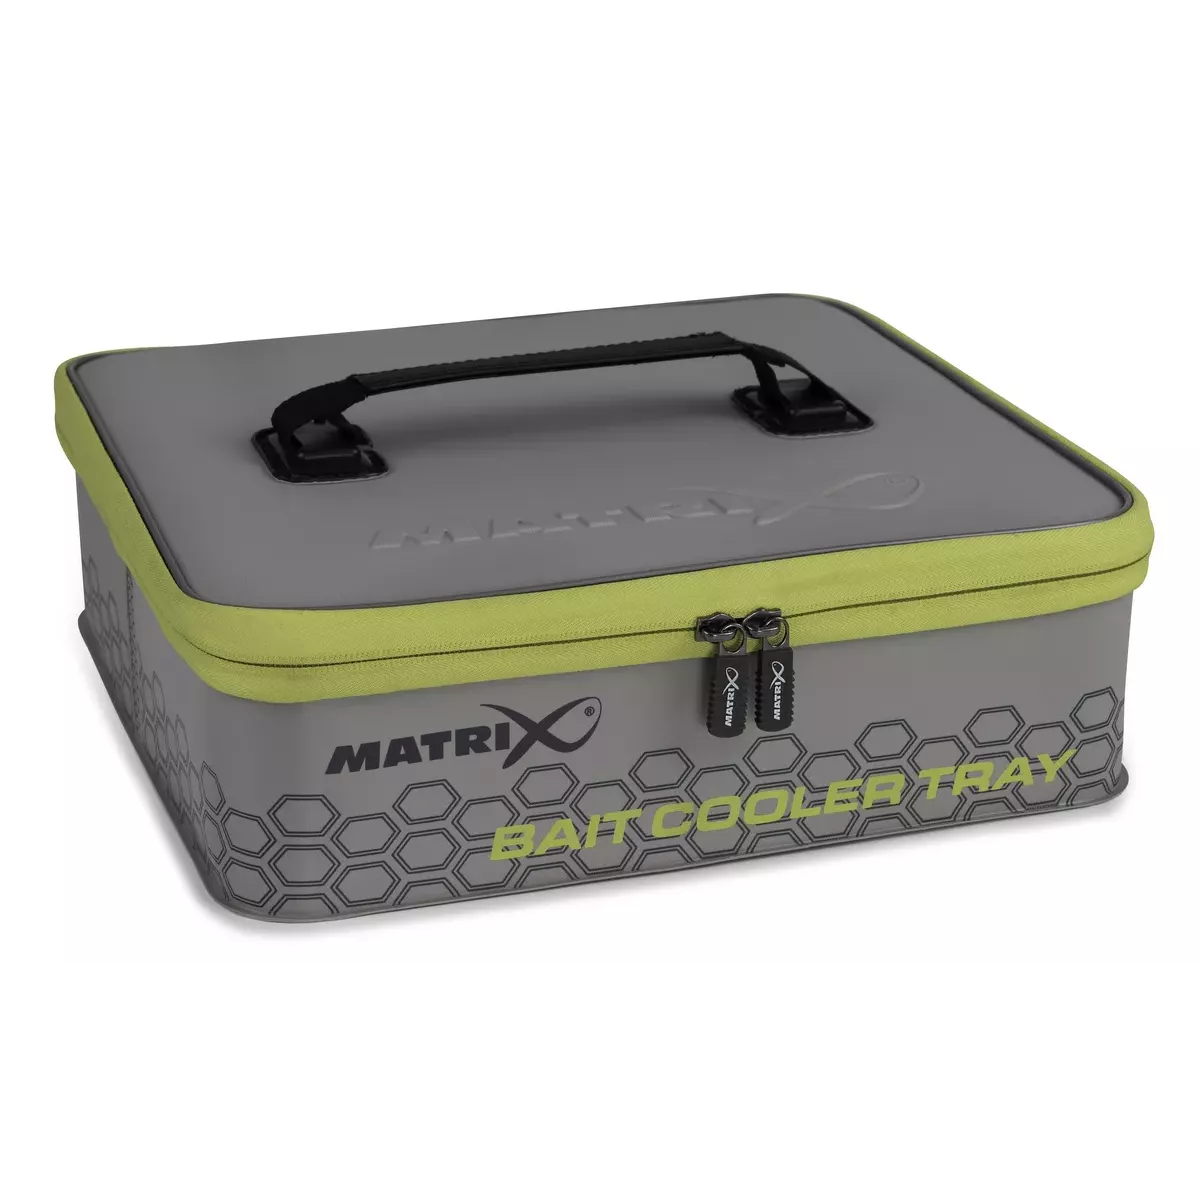 Organizer Matrix EVA Bait Cooler Tray GLU172